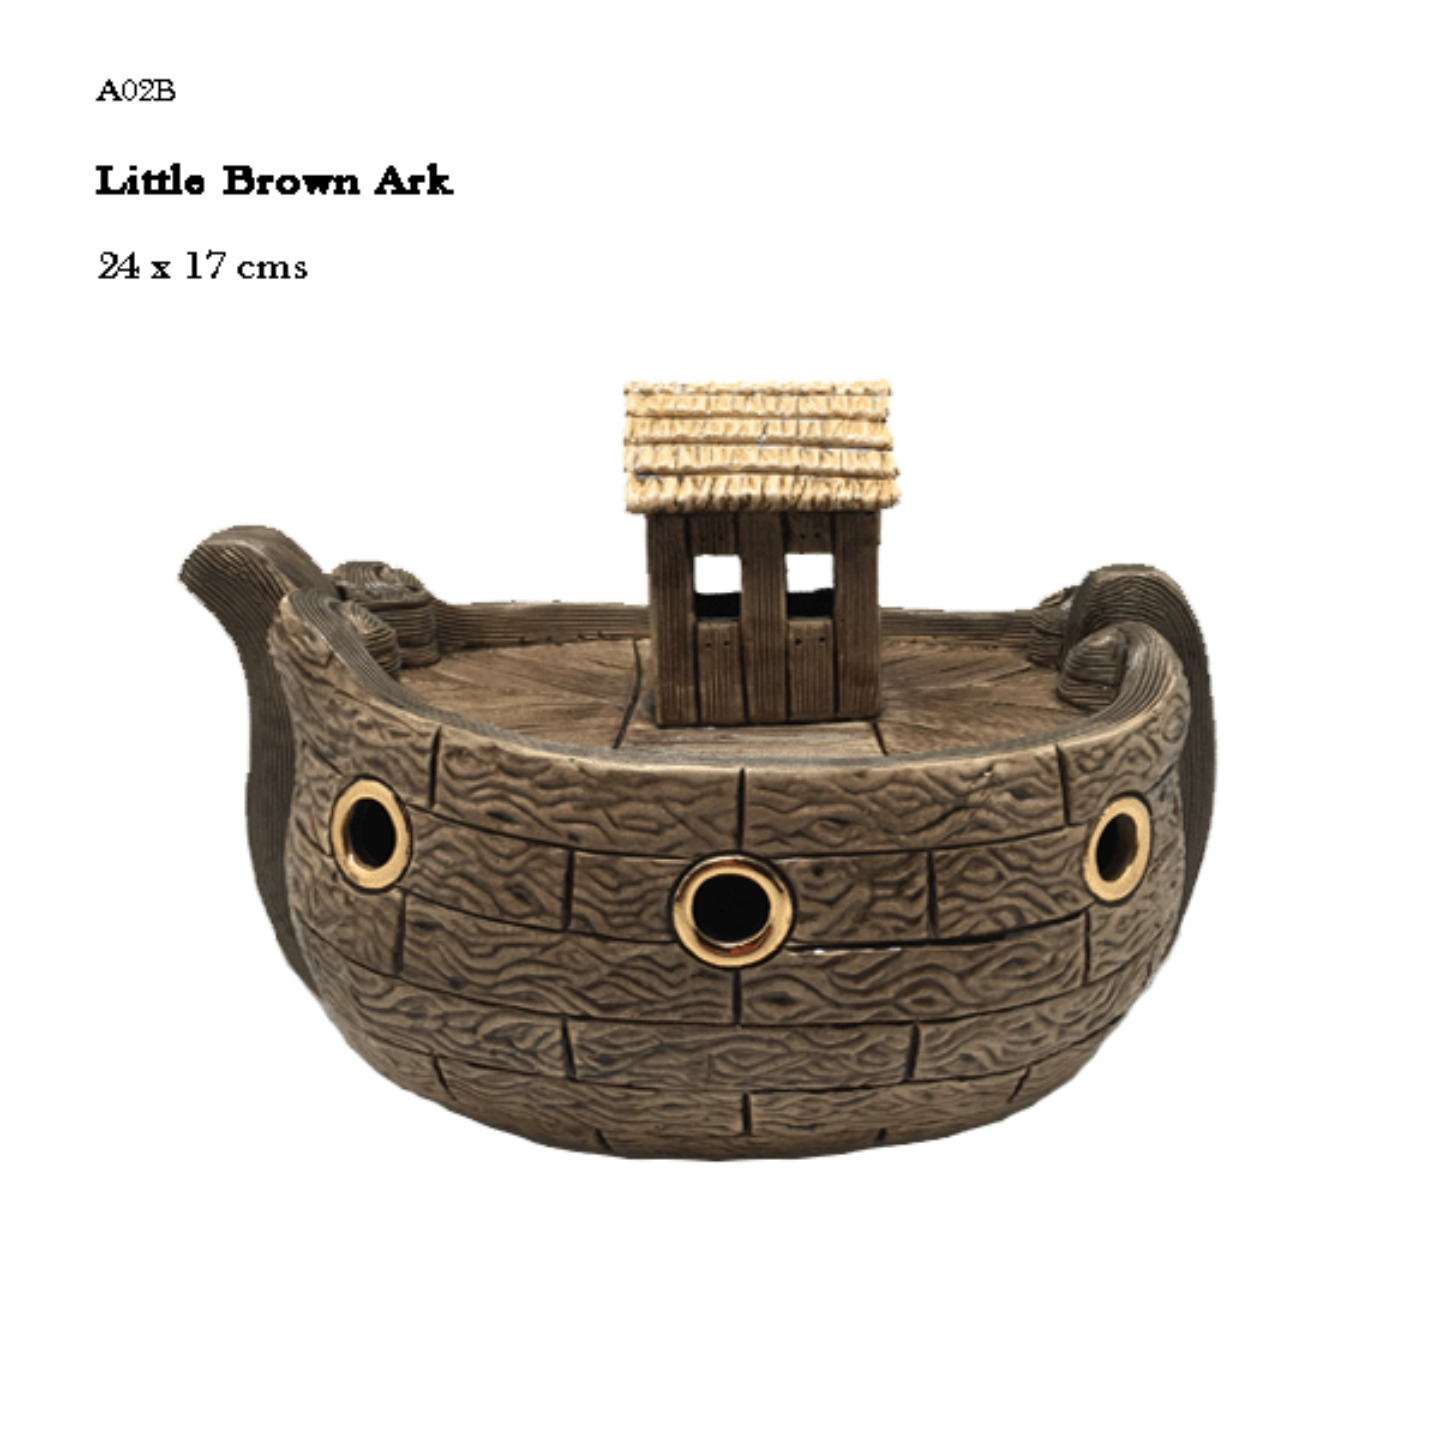 Little Brown Ark - 18K Gold Plating